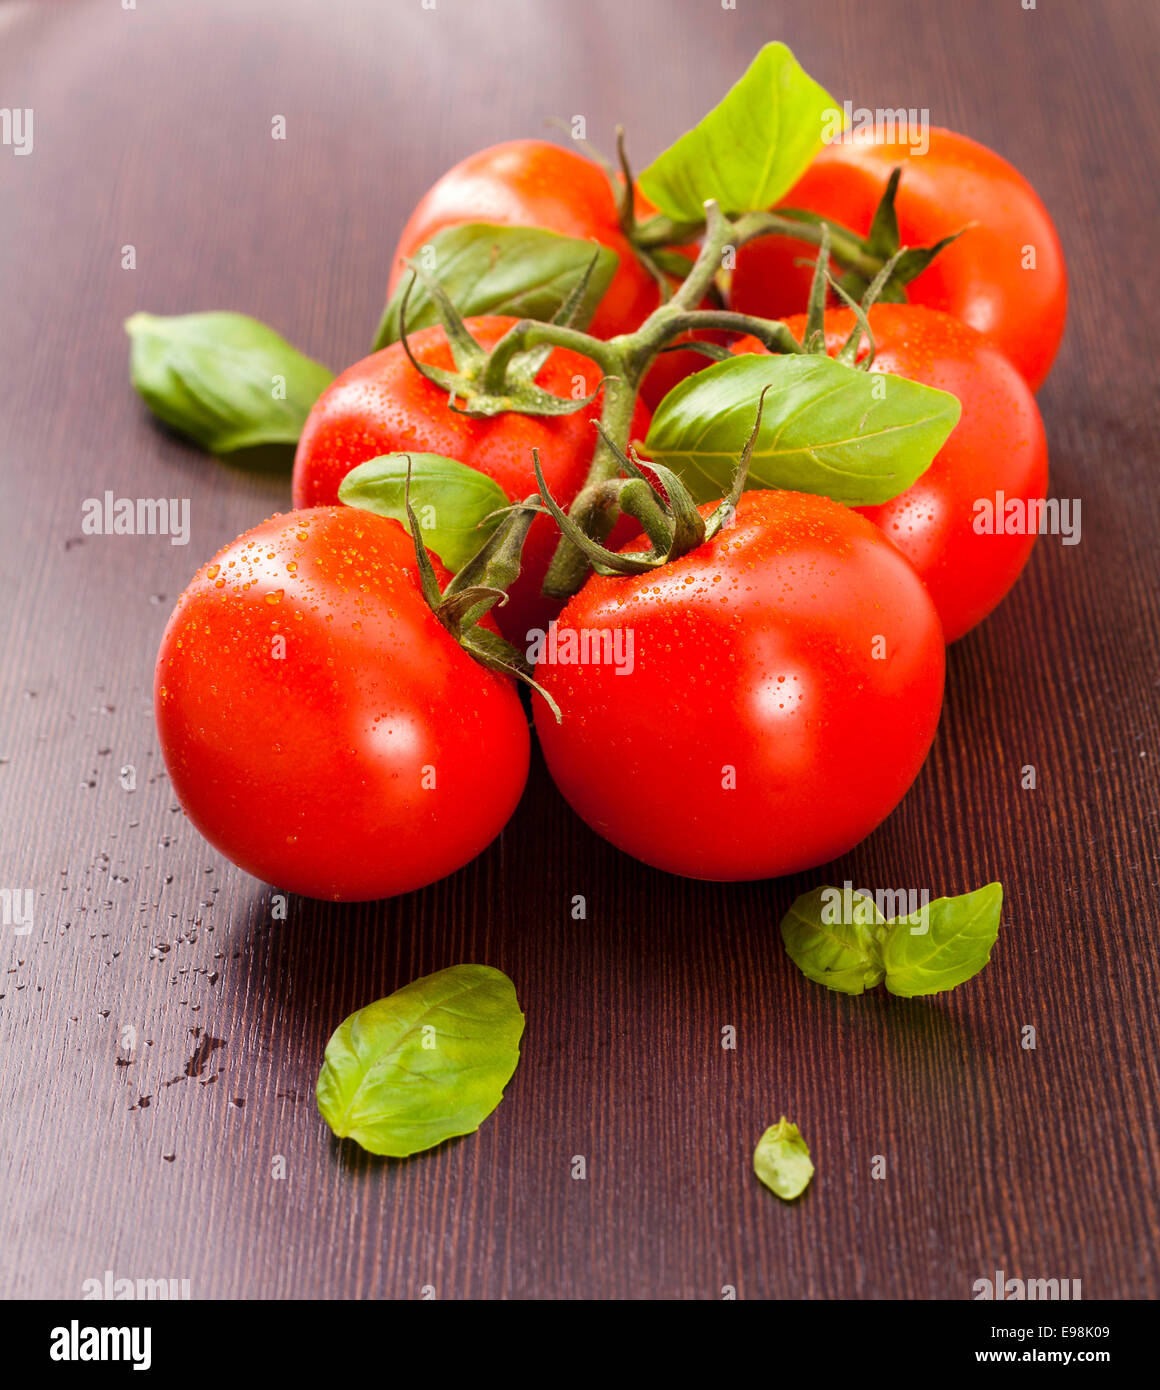 Vid tomates maduros a la albahaca sobre una placa de madera Foto de stock